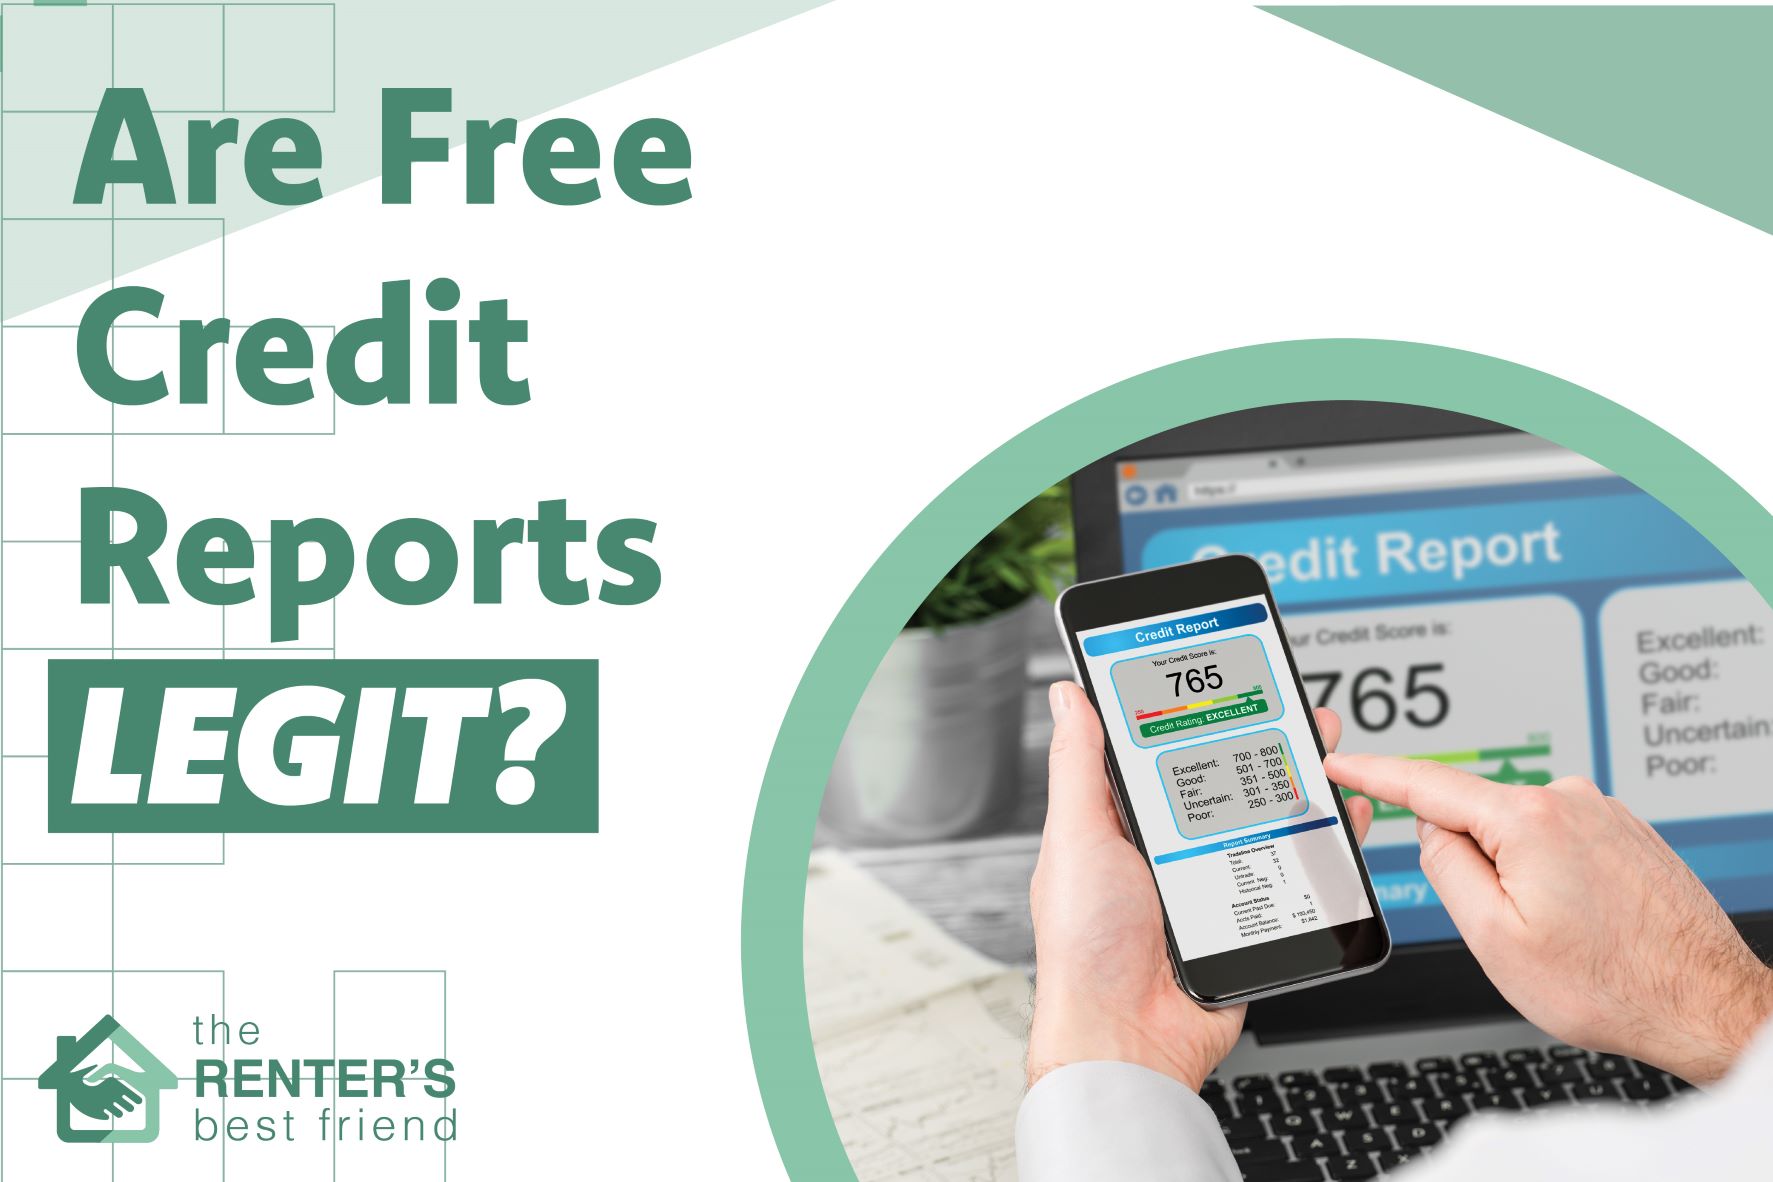 Are free credit reports legit?